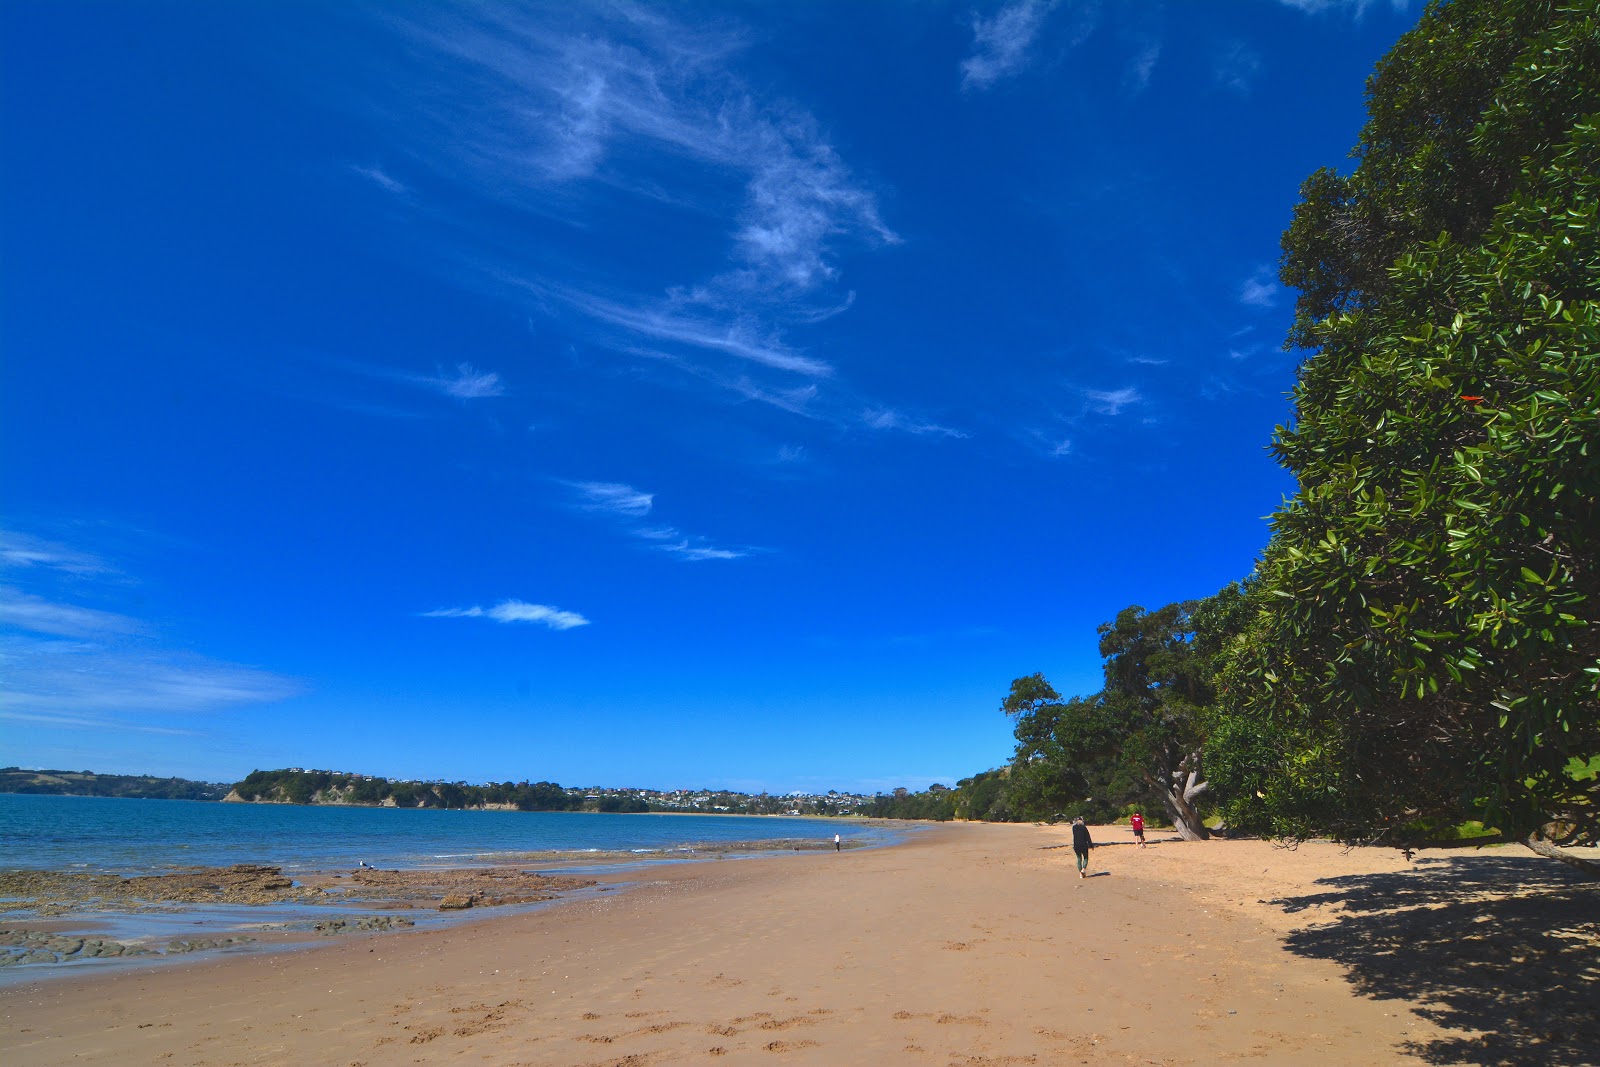 Fotografie cu Cooper Reserve Beach - locul popular printre cunoscătorii de relaxare